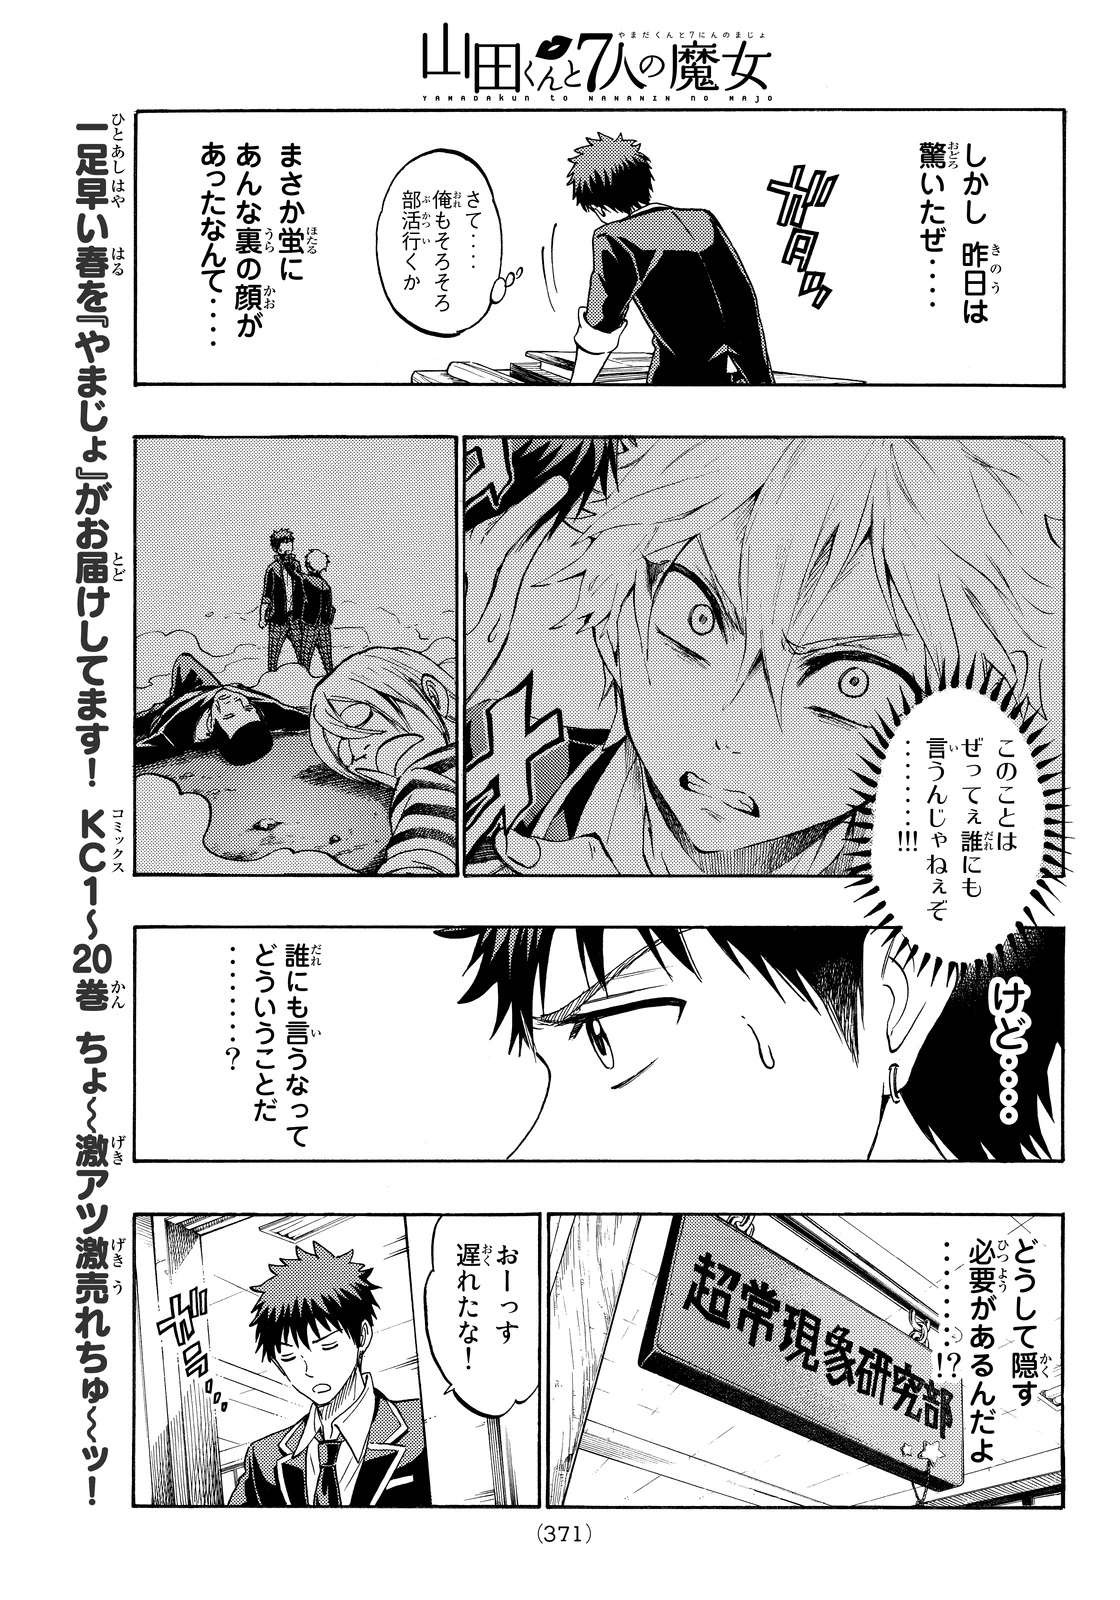 Yamada-kun to 7-nin no Majo - Chapter 189 - Page 3